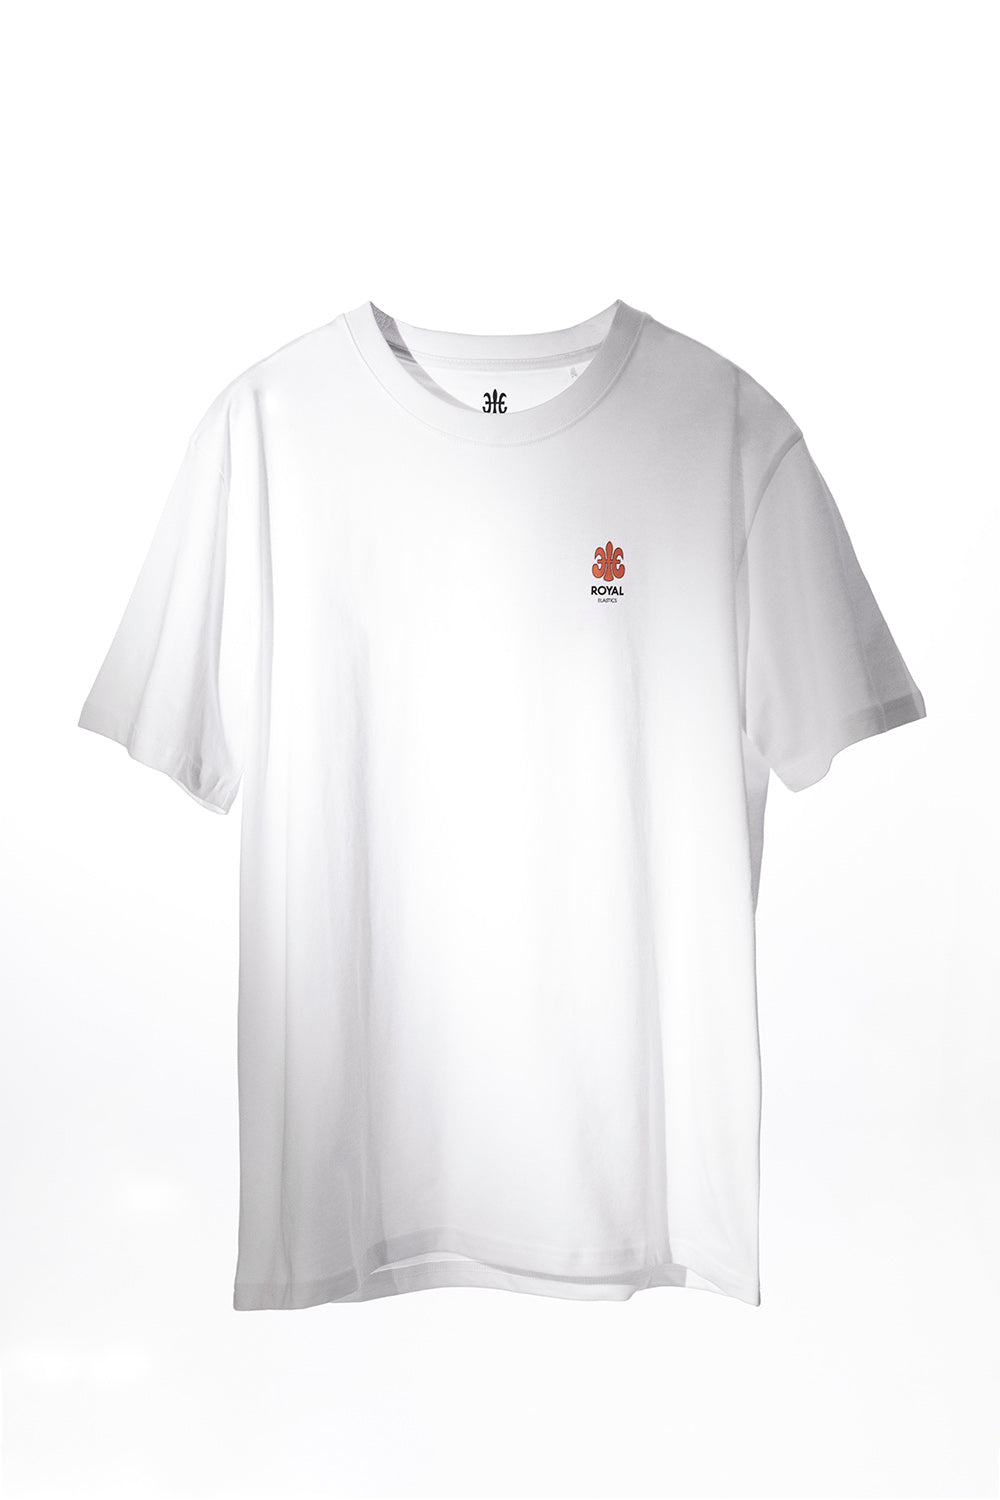 Unisex Logo T-shirt White R31132-001